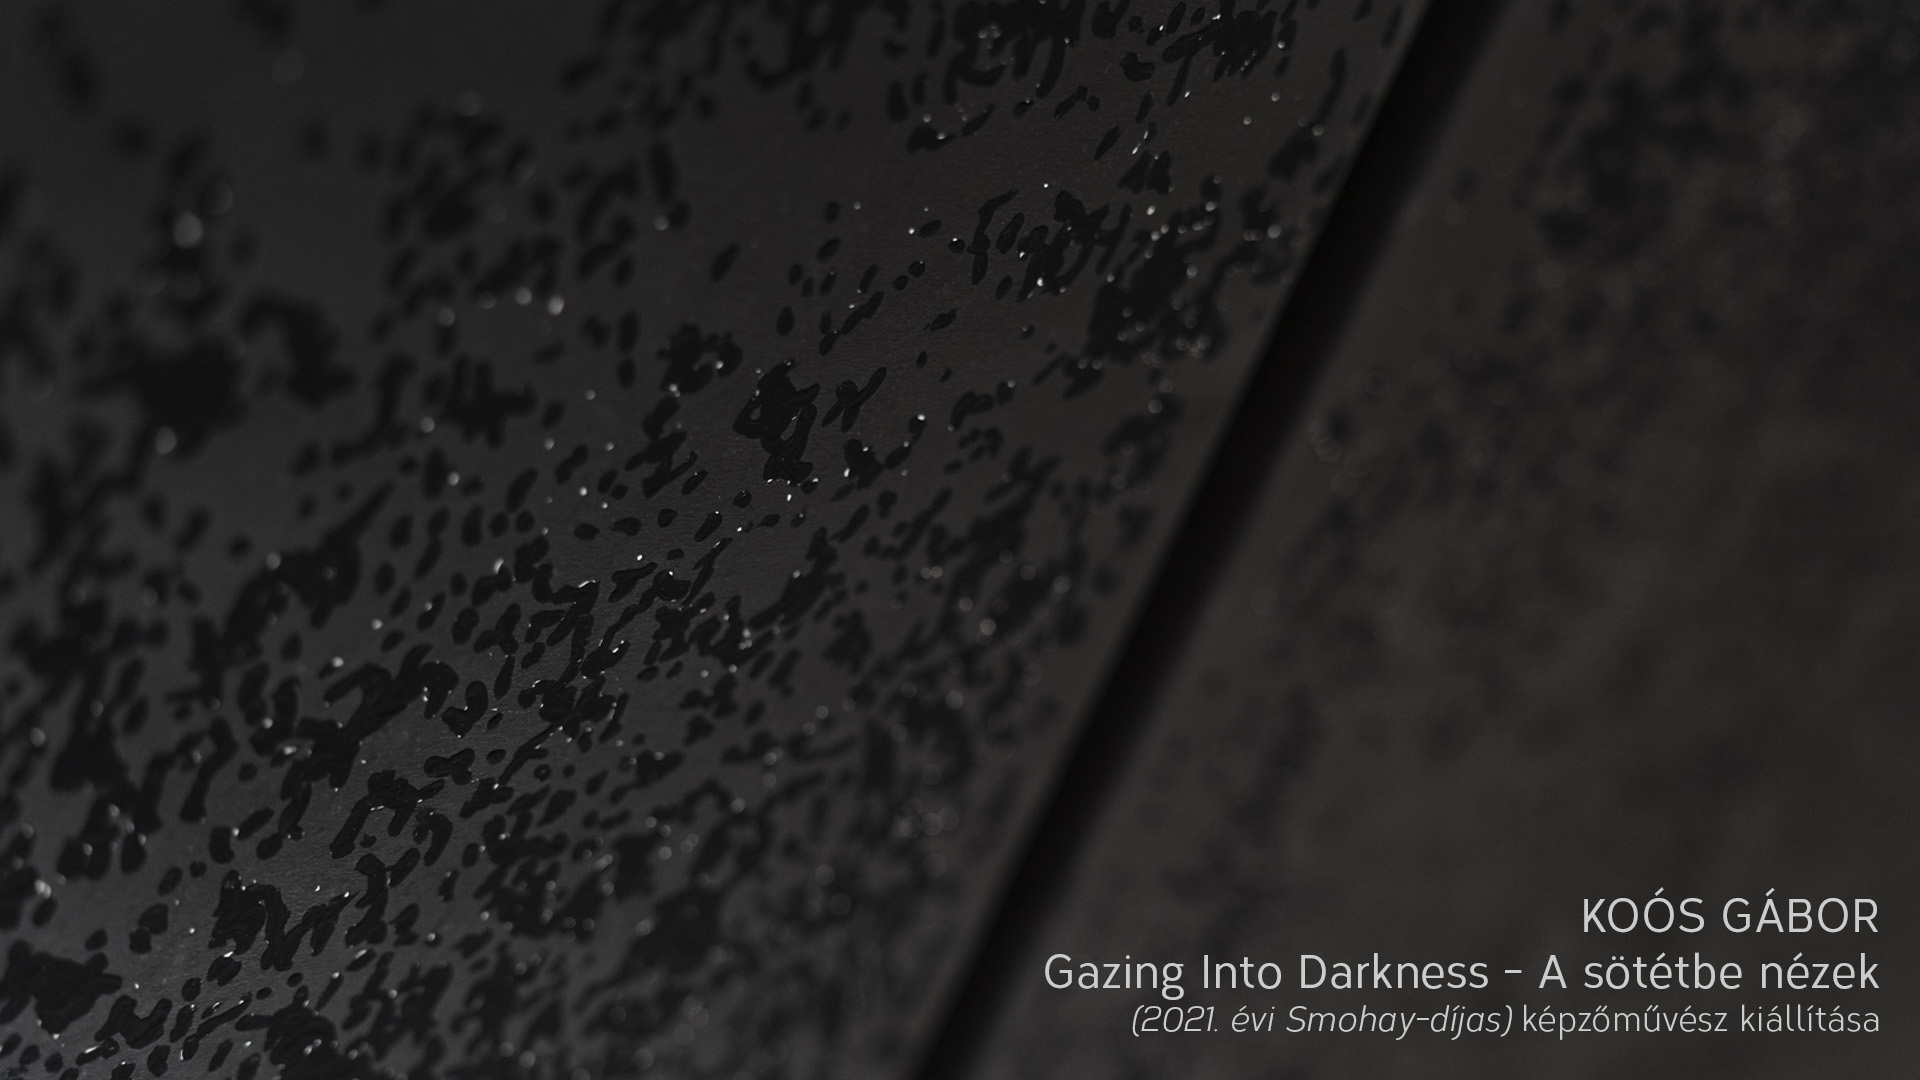 Gazing Into Darkness - Koós Gábor kiállítása nyílik meg